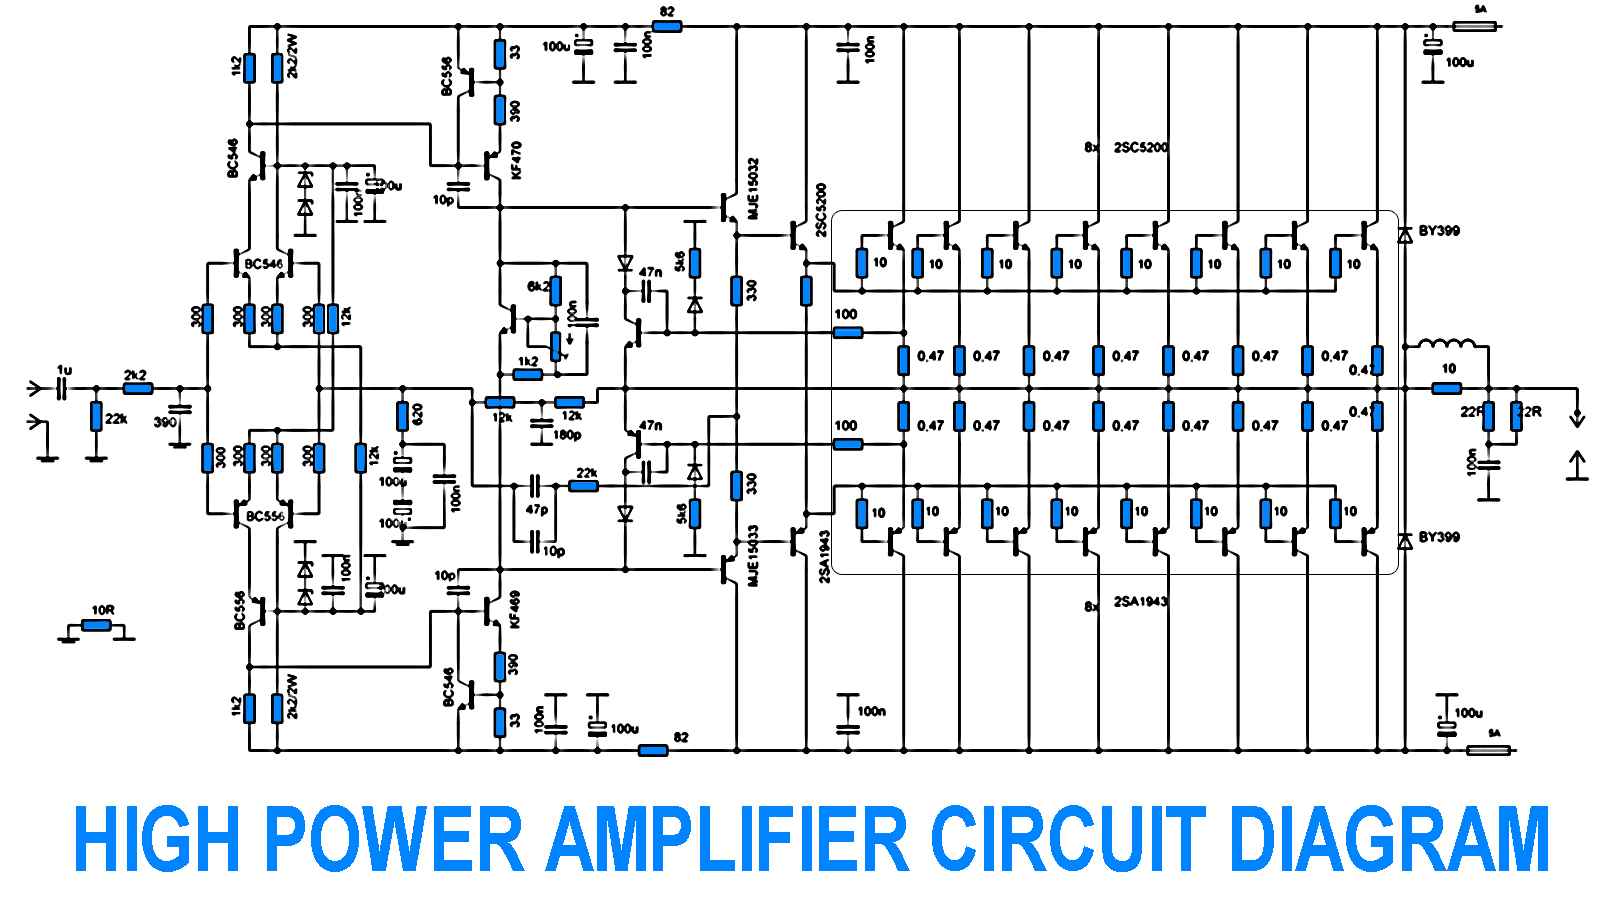 2000w Transistor Audio Power Amplifier Circuit Diagrsms - 700w Power Amplifier With 2sc5200 2sa1943 - 2000w Transistor Audio Power Amplifier Circuit Diagrsms